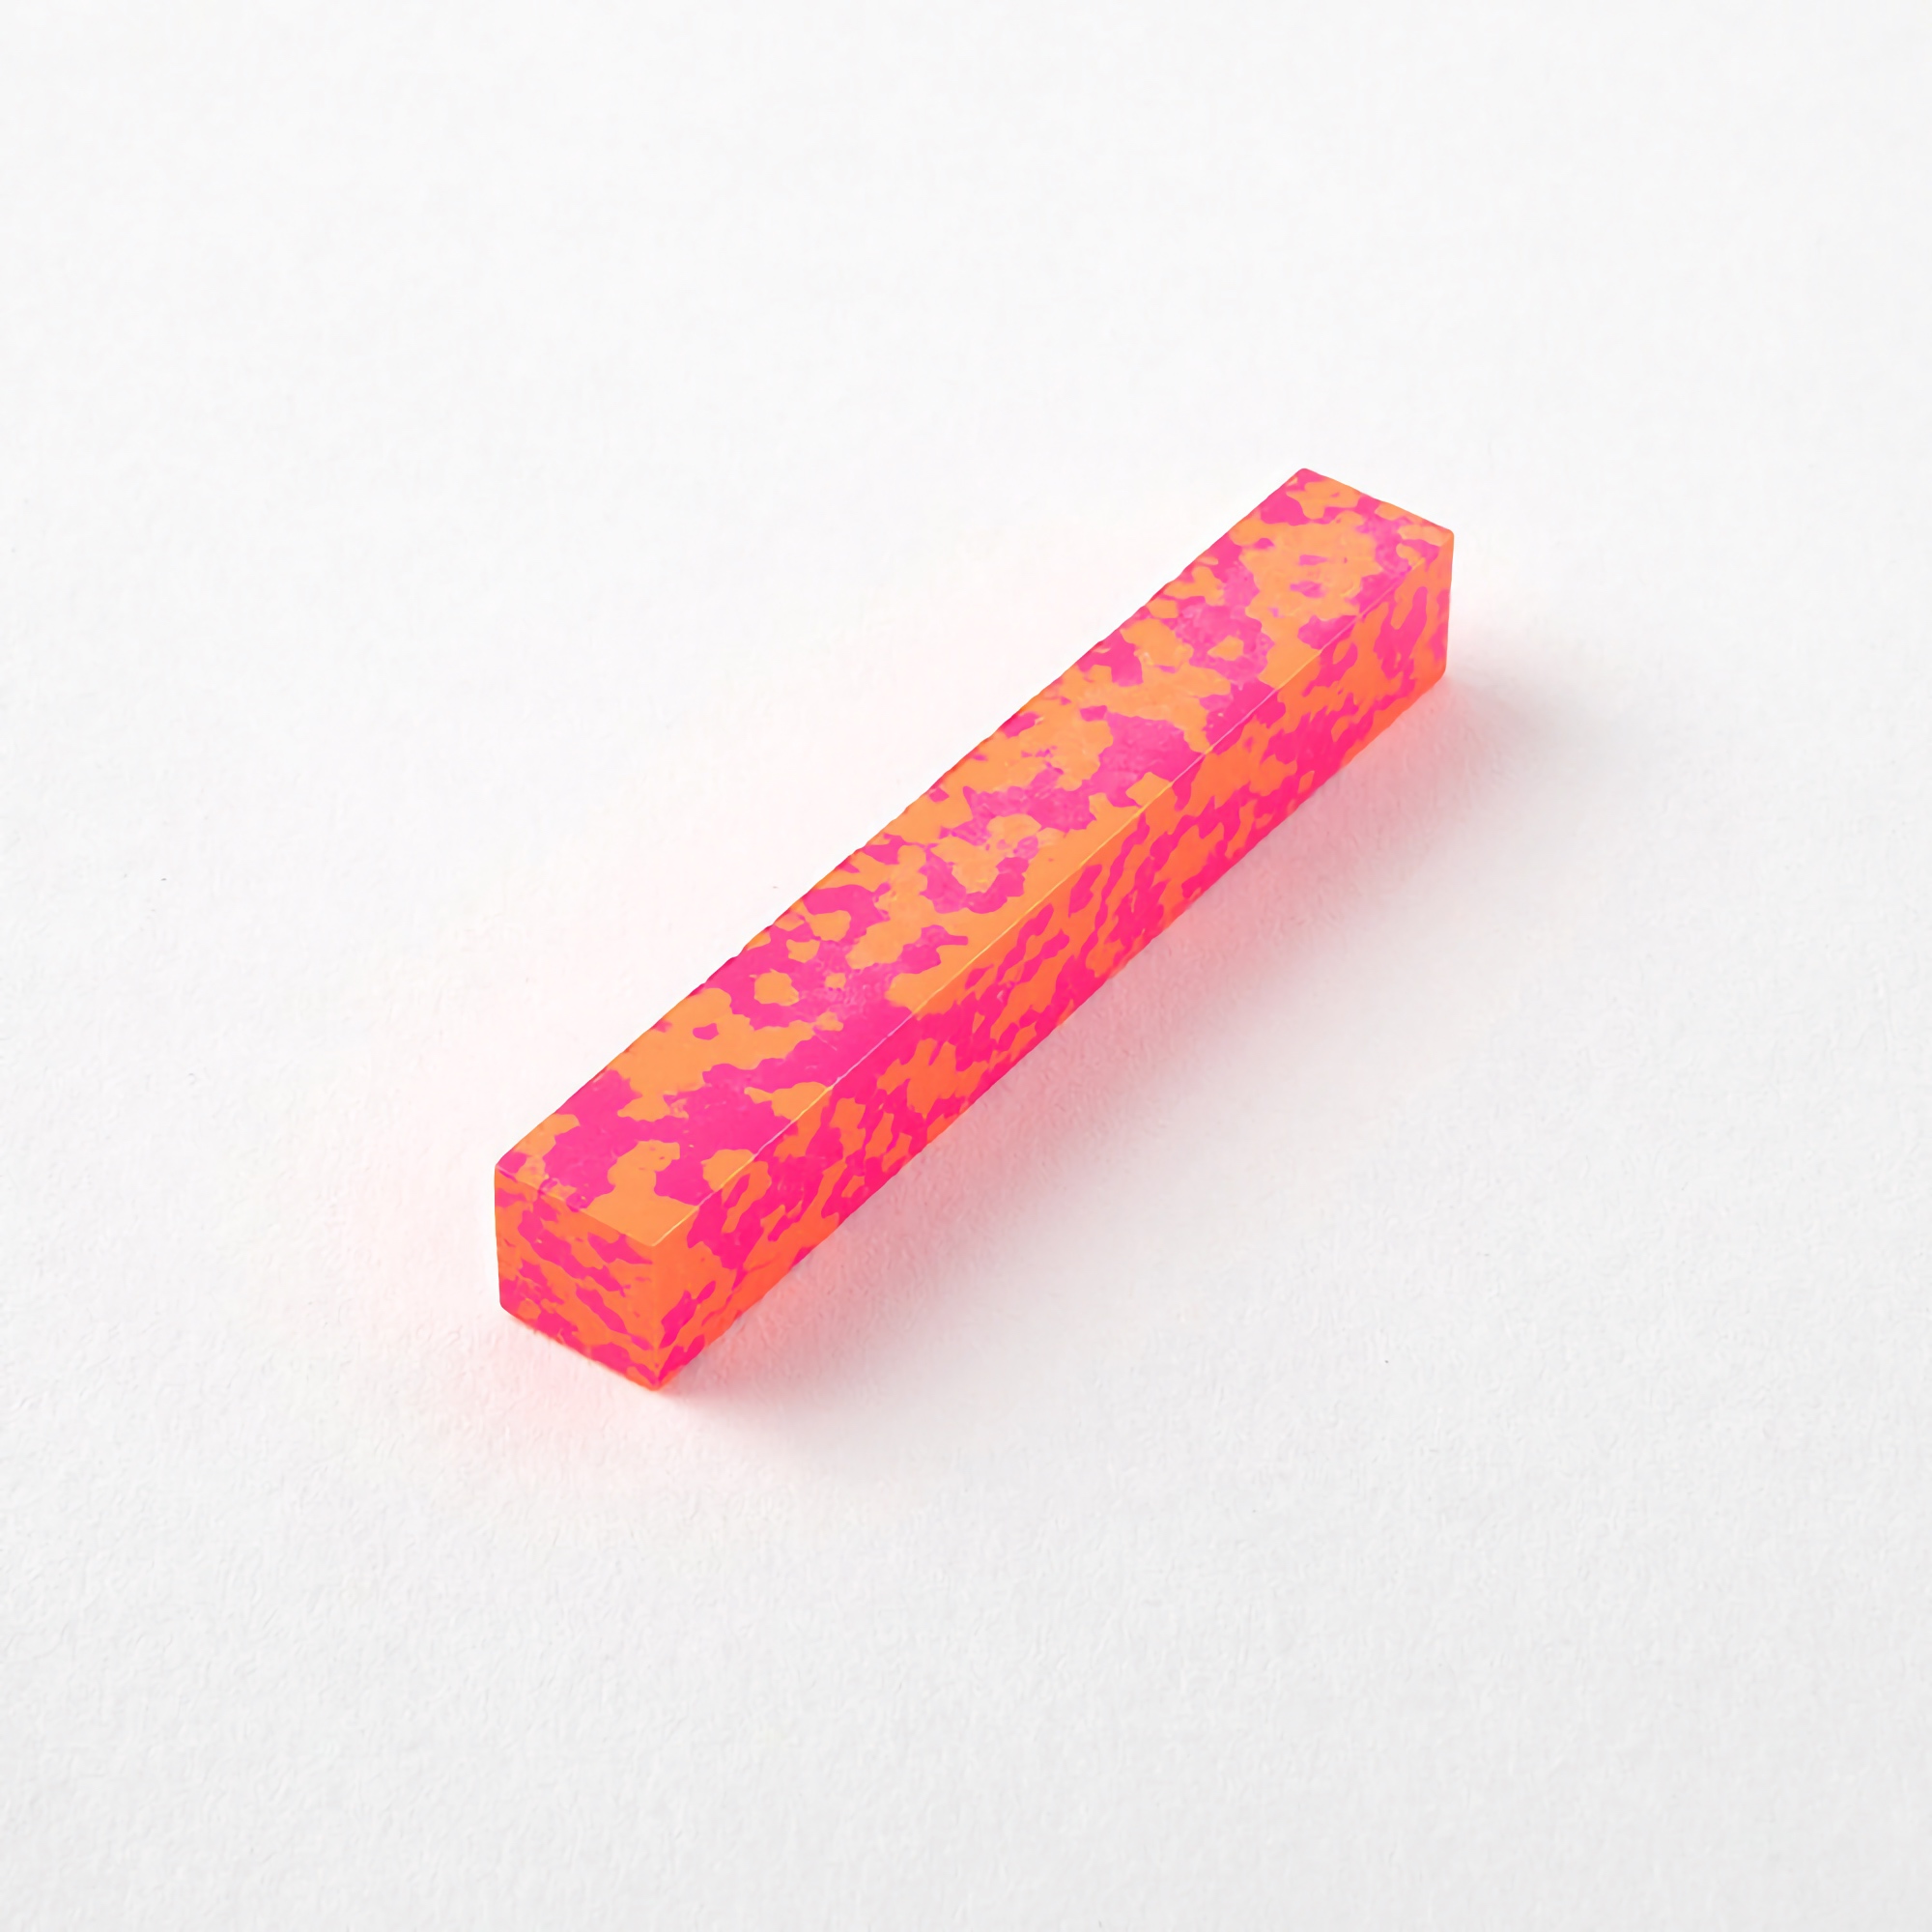 Midori Decoration Crayon Marble Pink x Orange Refill